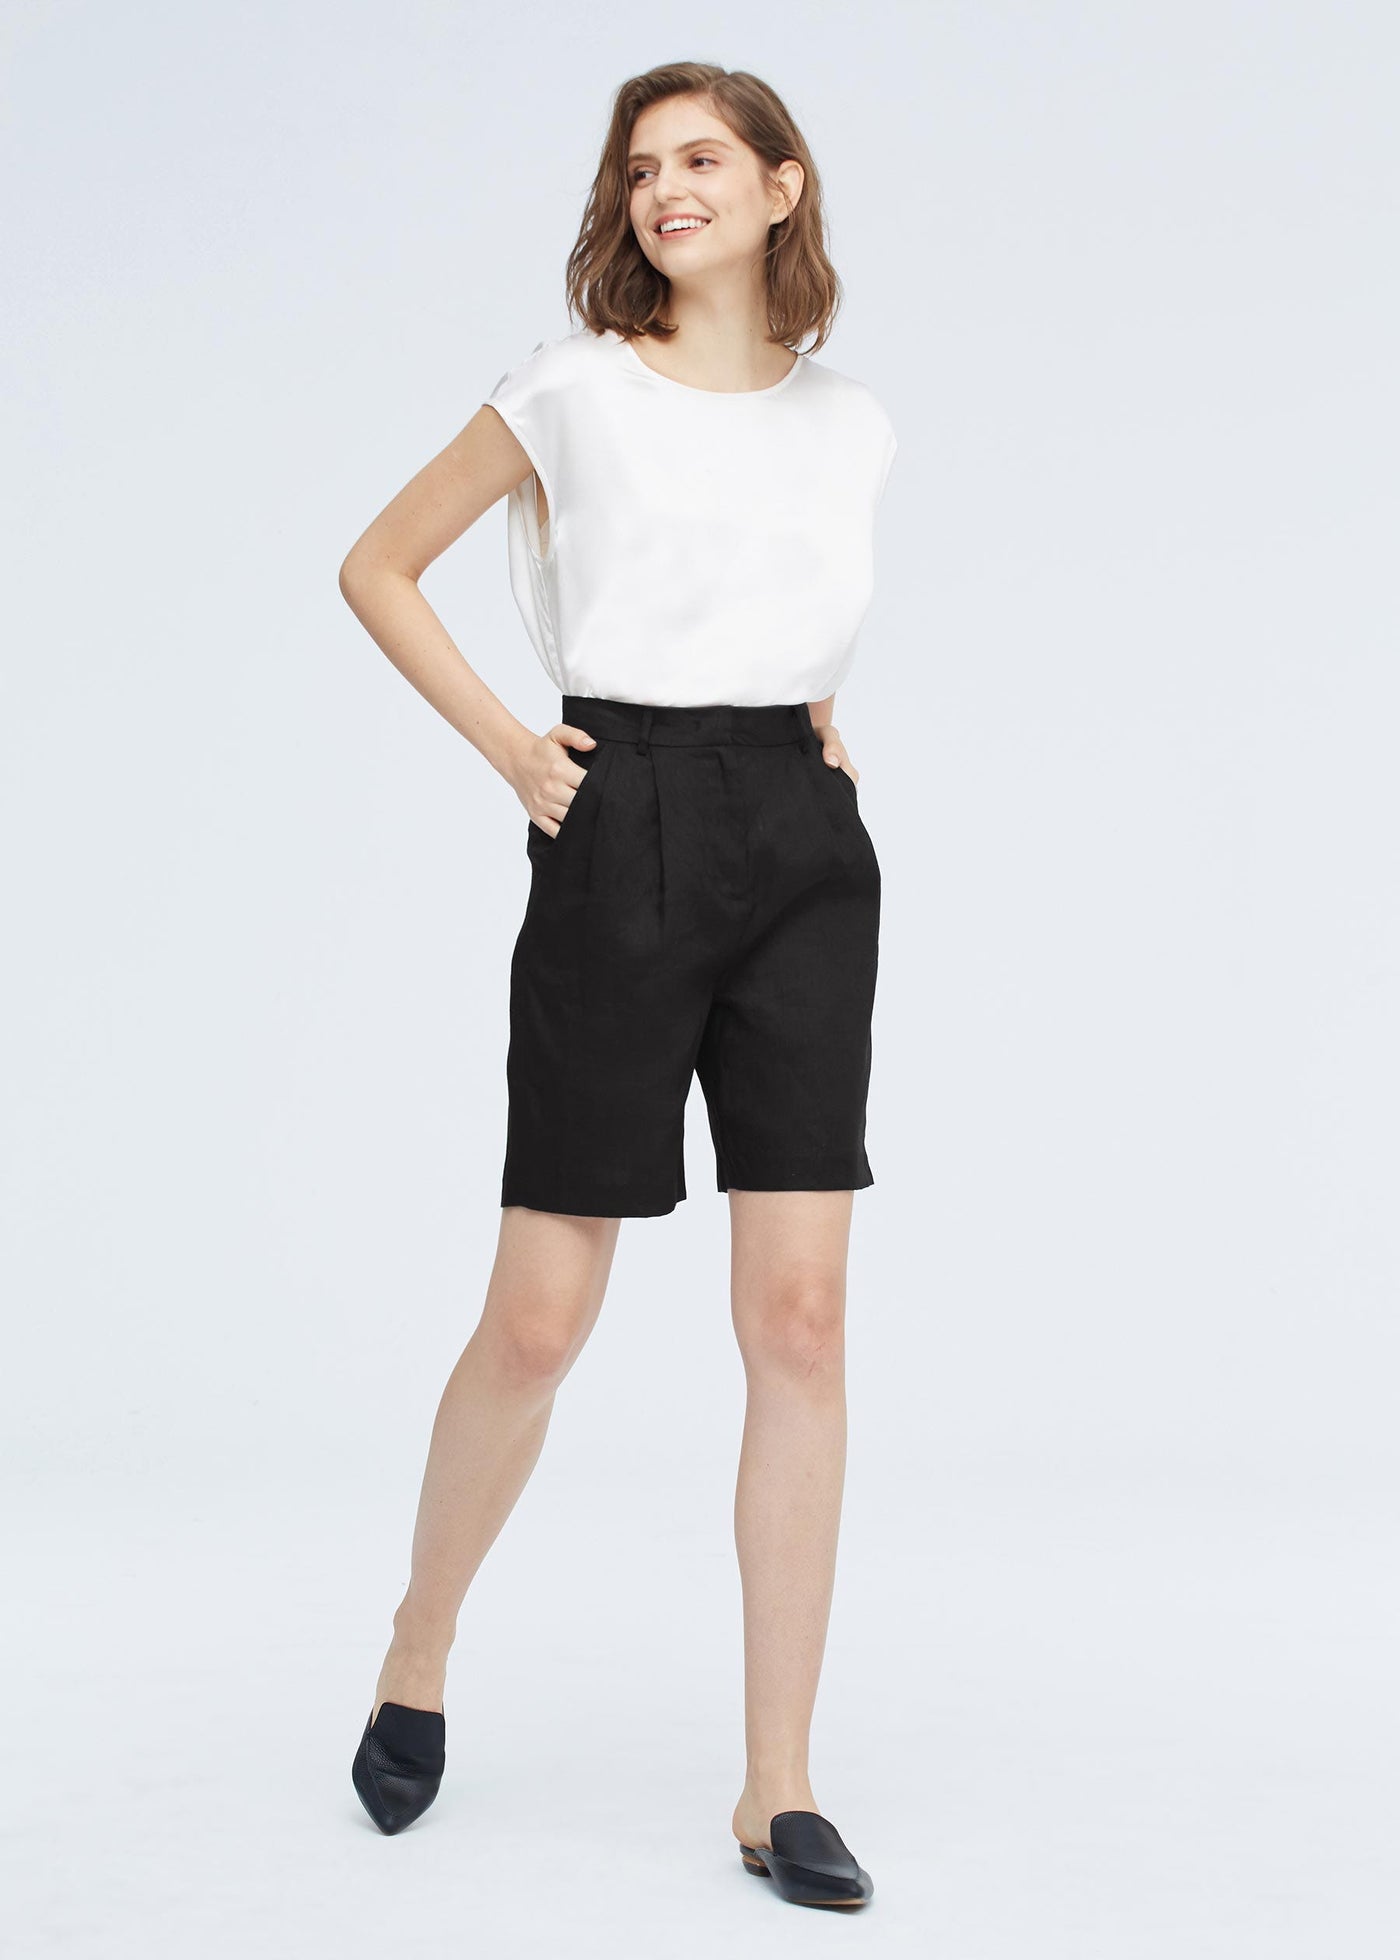 Women's Black Linen Shorts Black LILYSILK Factory